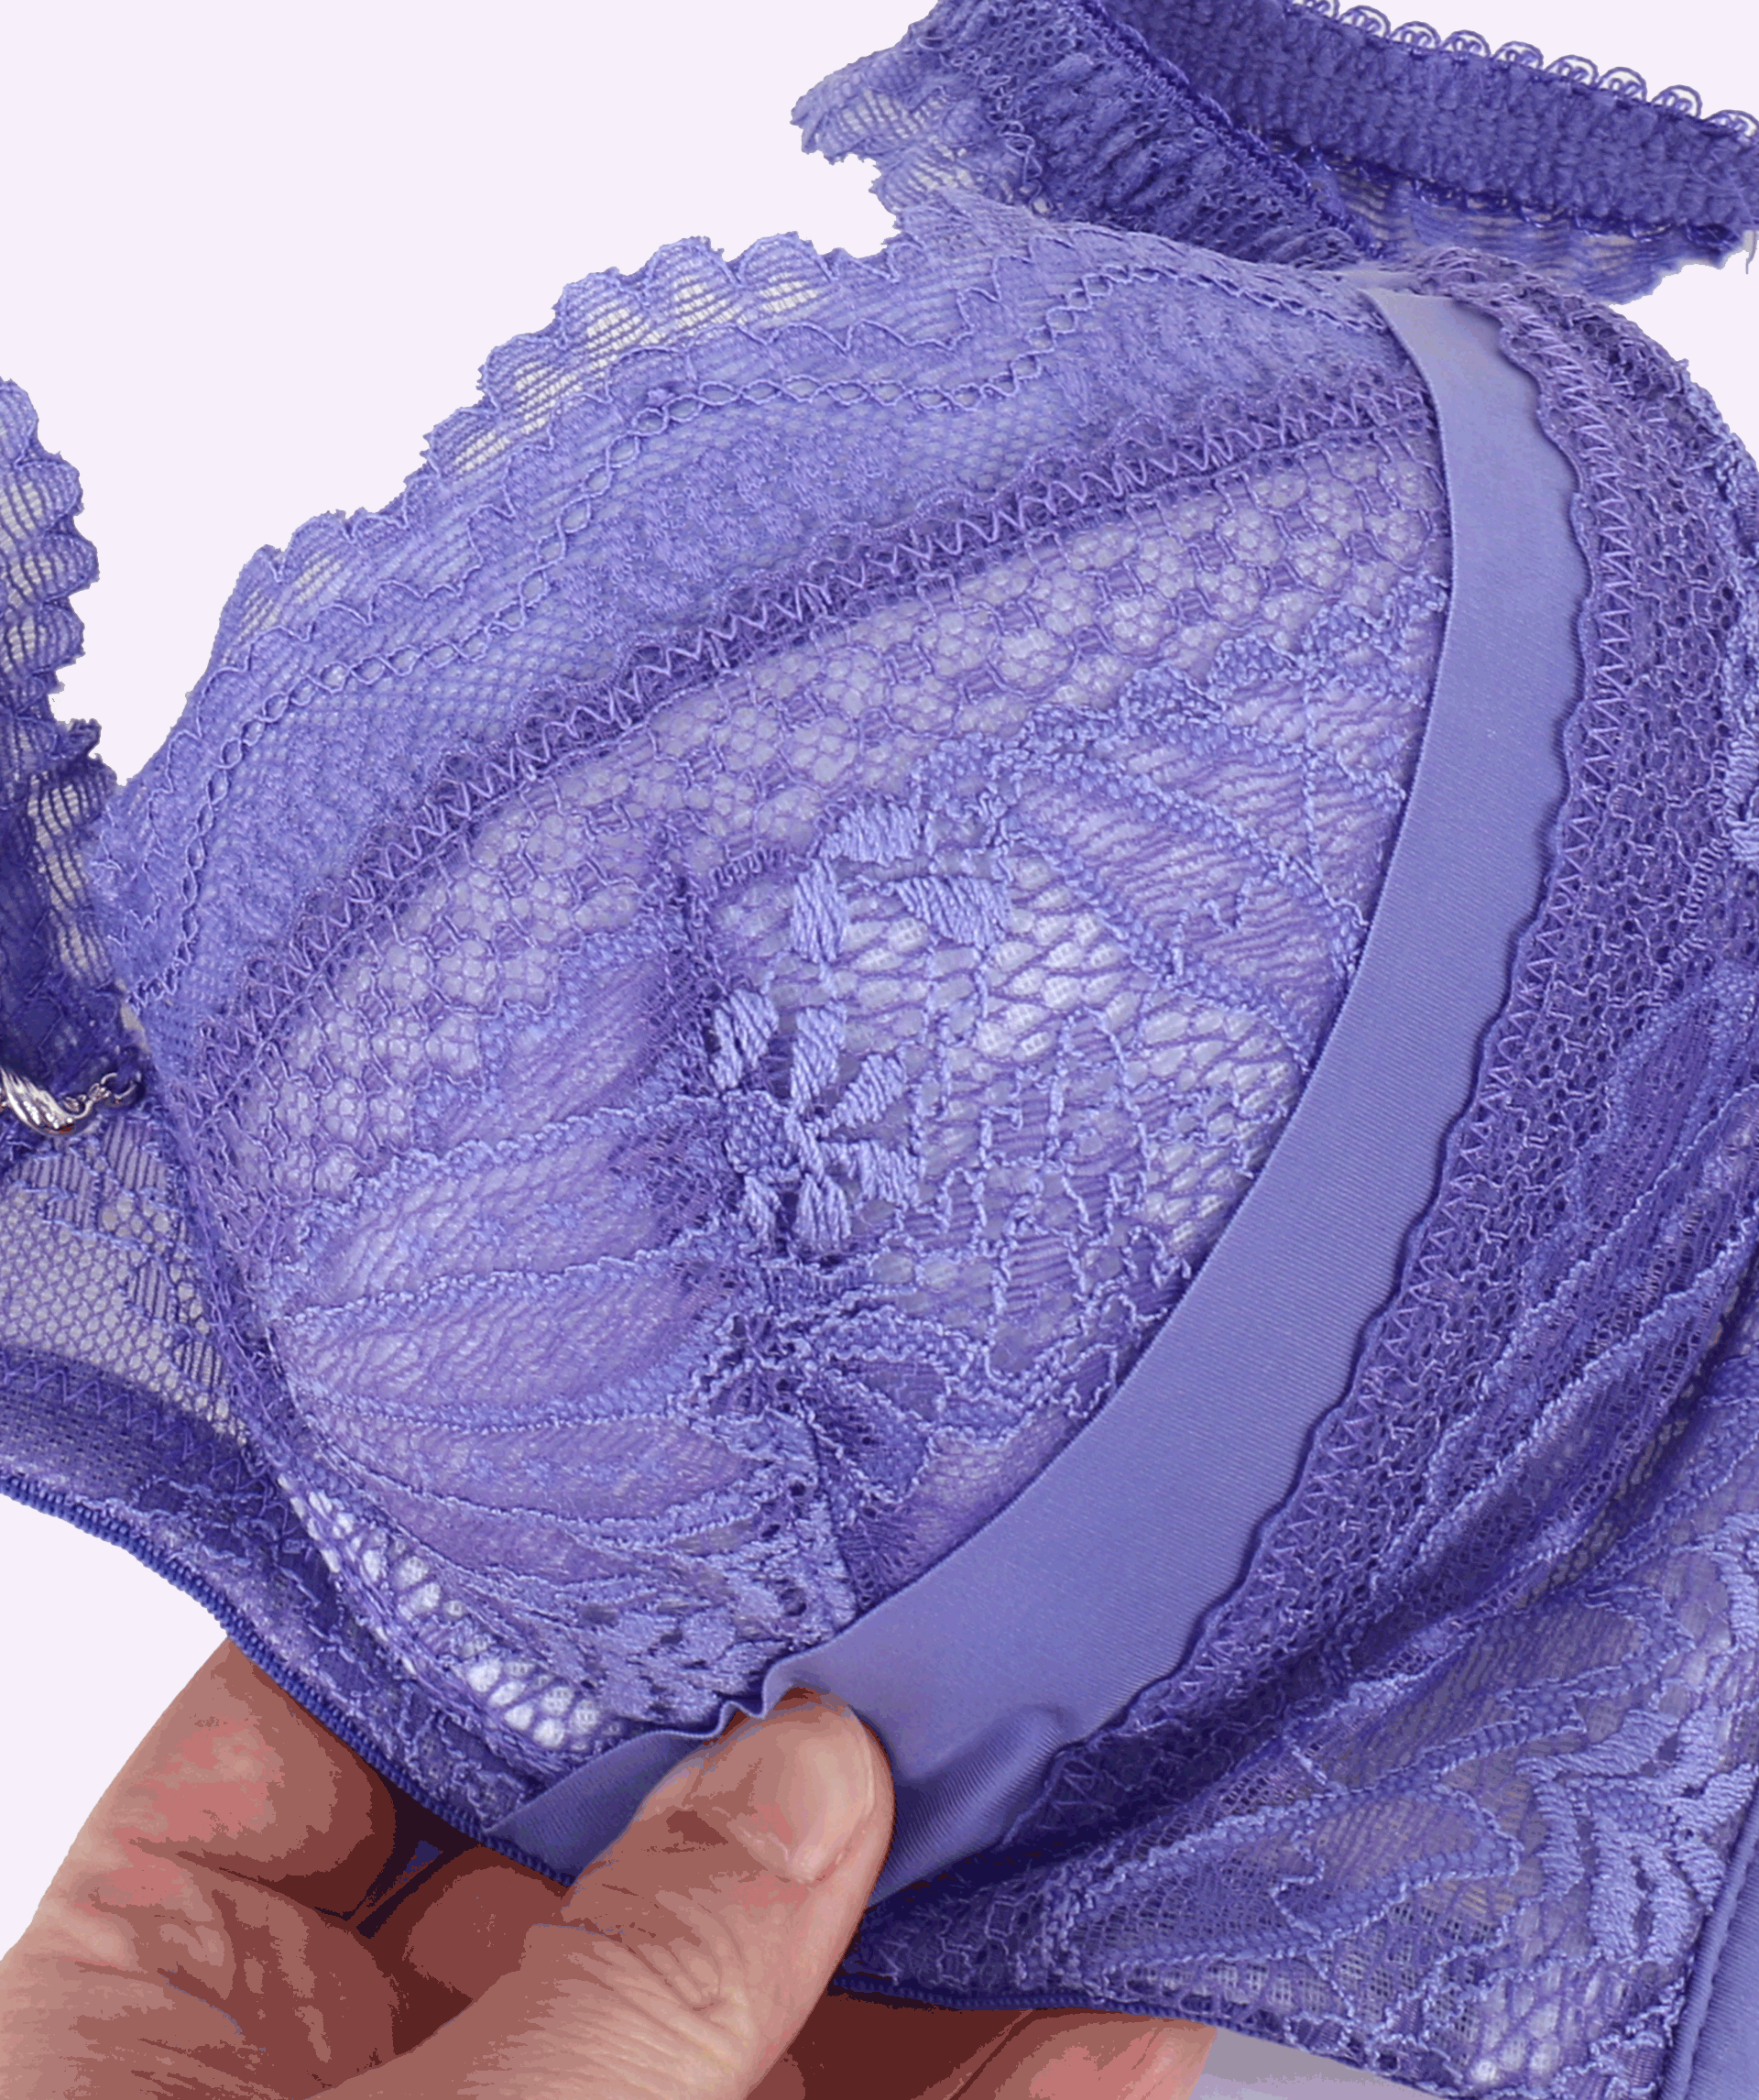 4D雙層旋轉減壓  冰絲涼感 天使棉機能降溫內衣BCDE罩杯(月光紫)